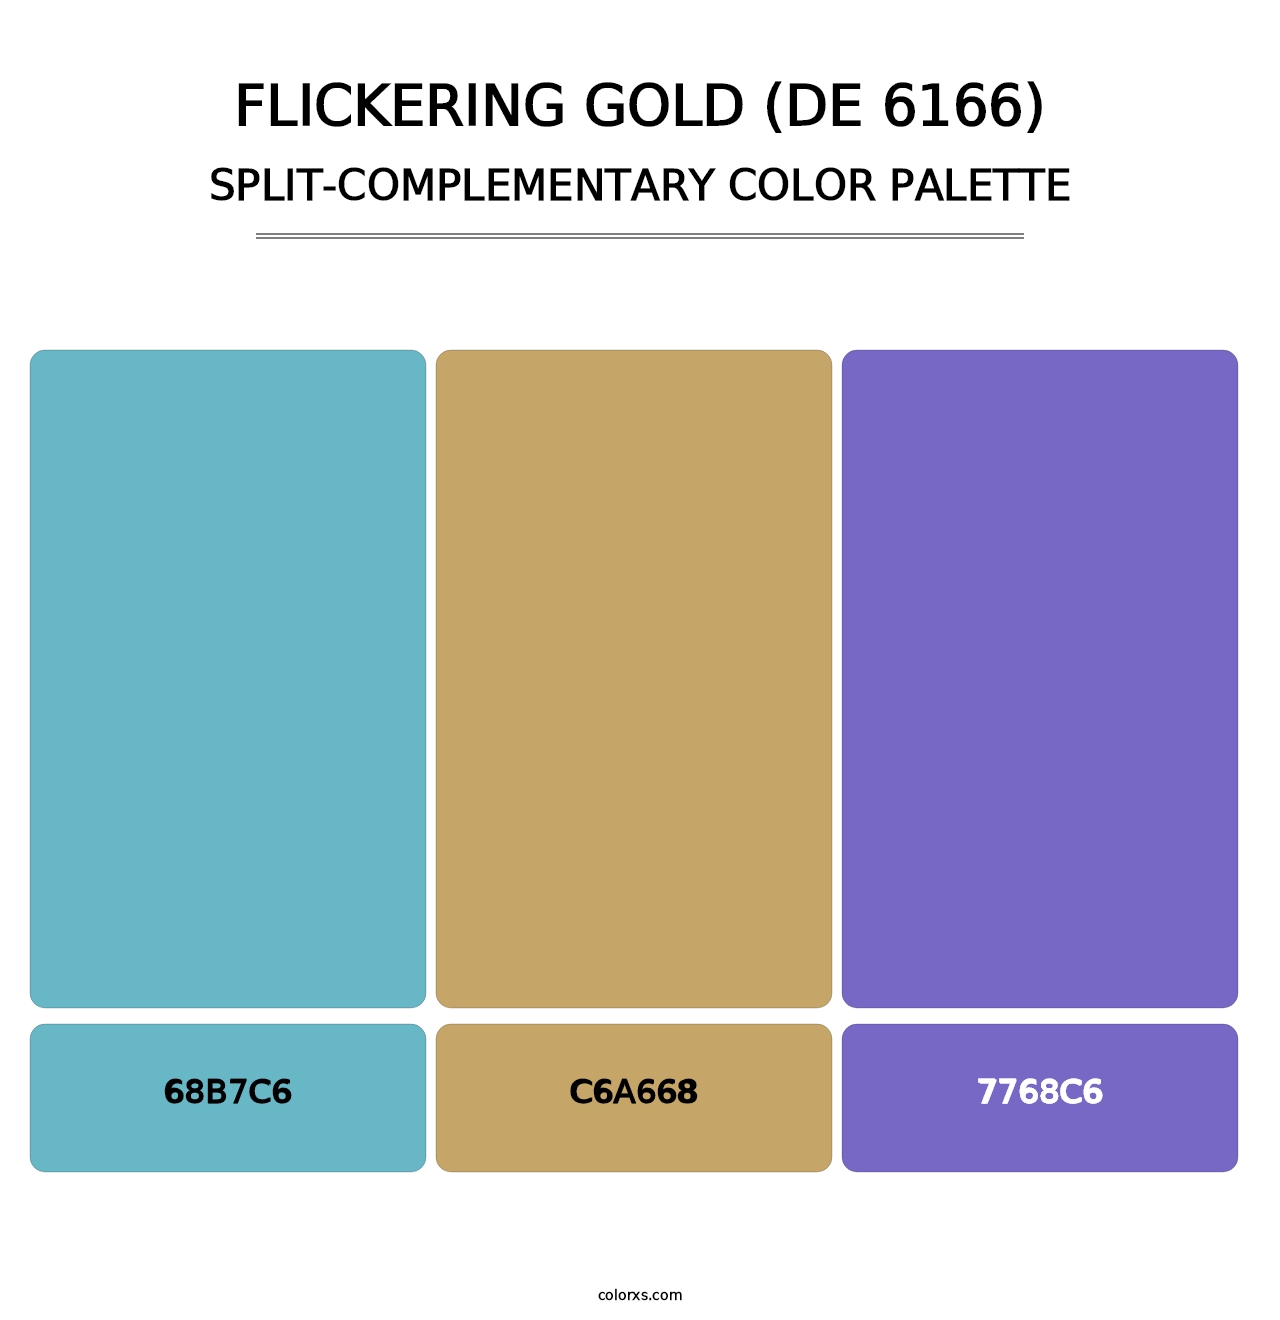 Flickering Gold (DE 6166) - Split-Complementary Color Palette